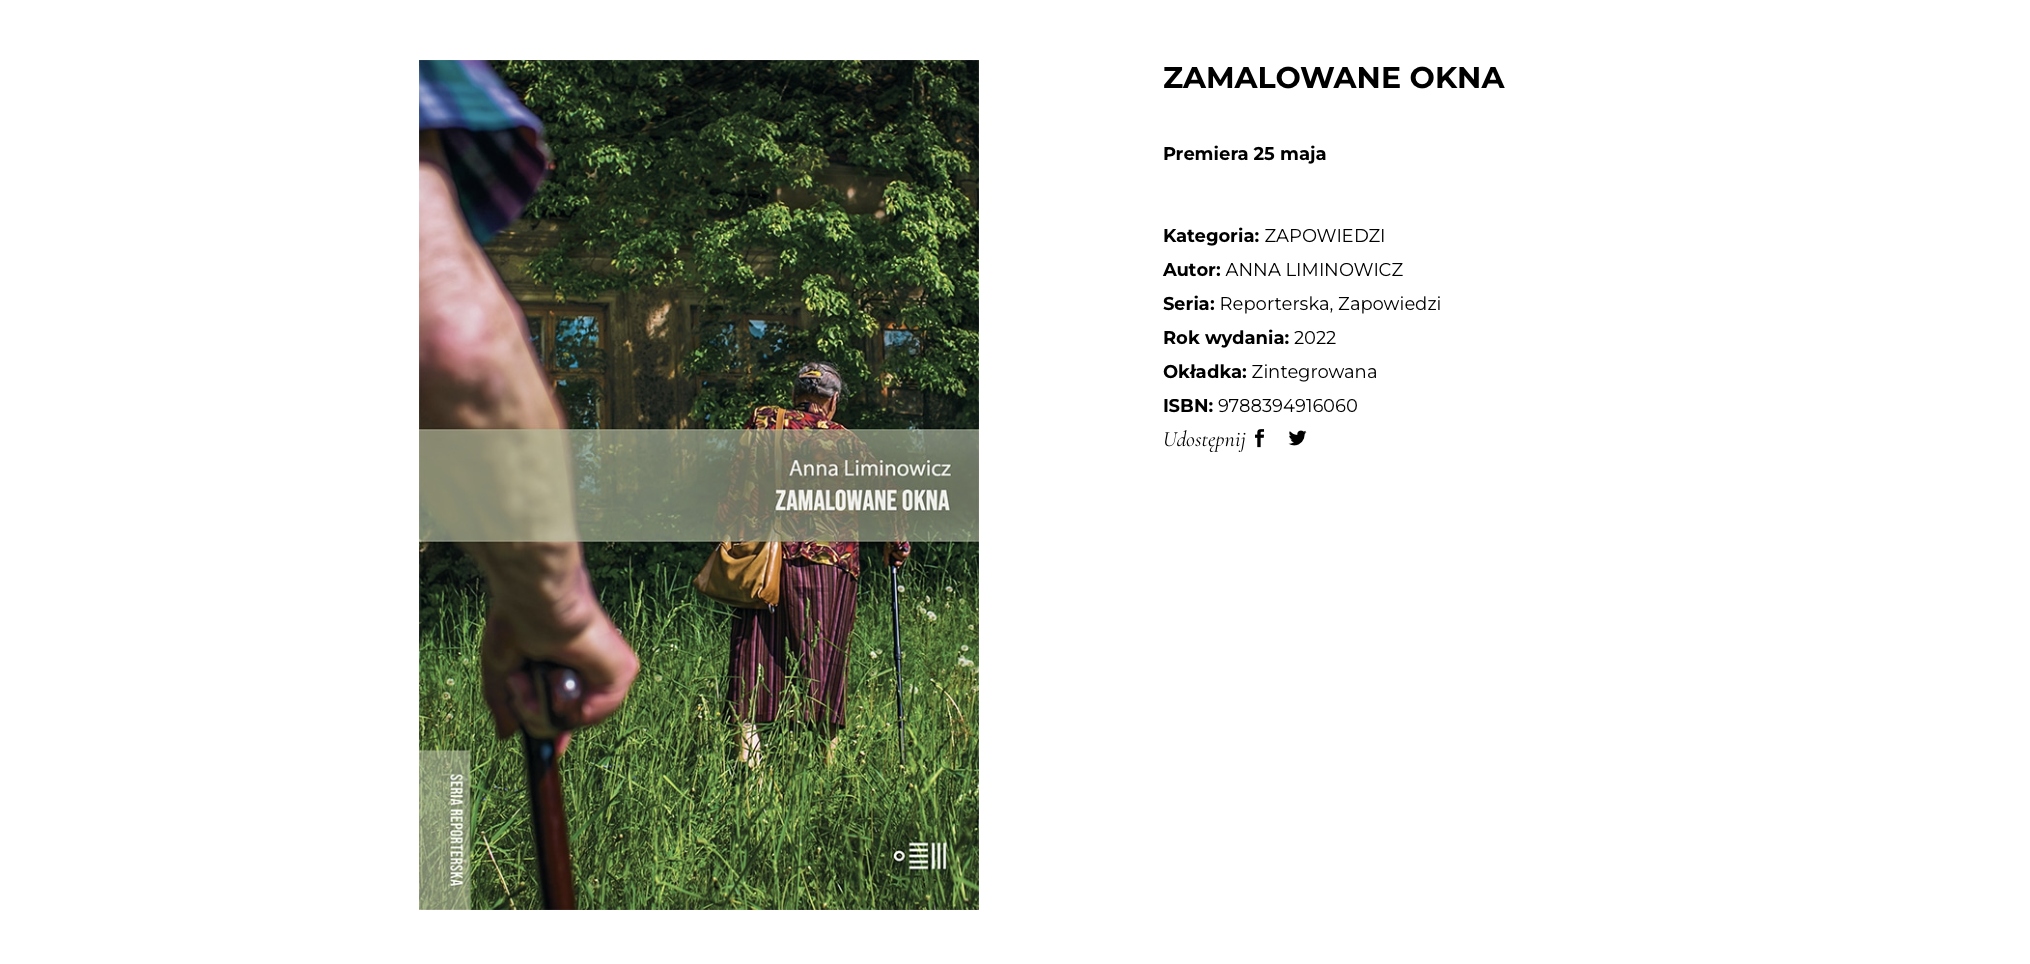 ZAMALOWANE OKNA ( Painted-over windows ) BOOK